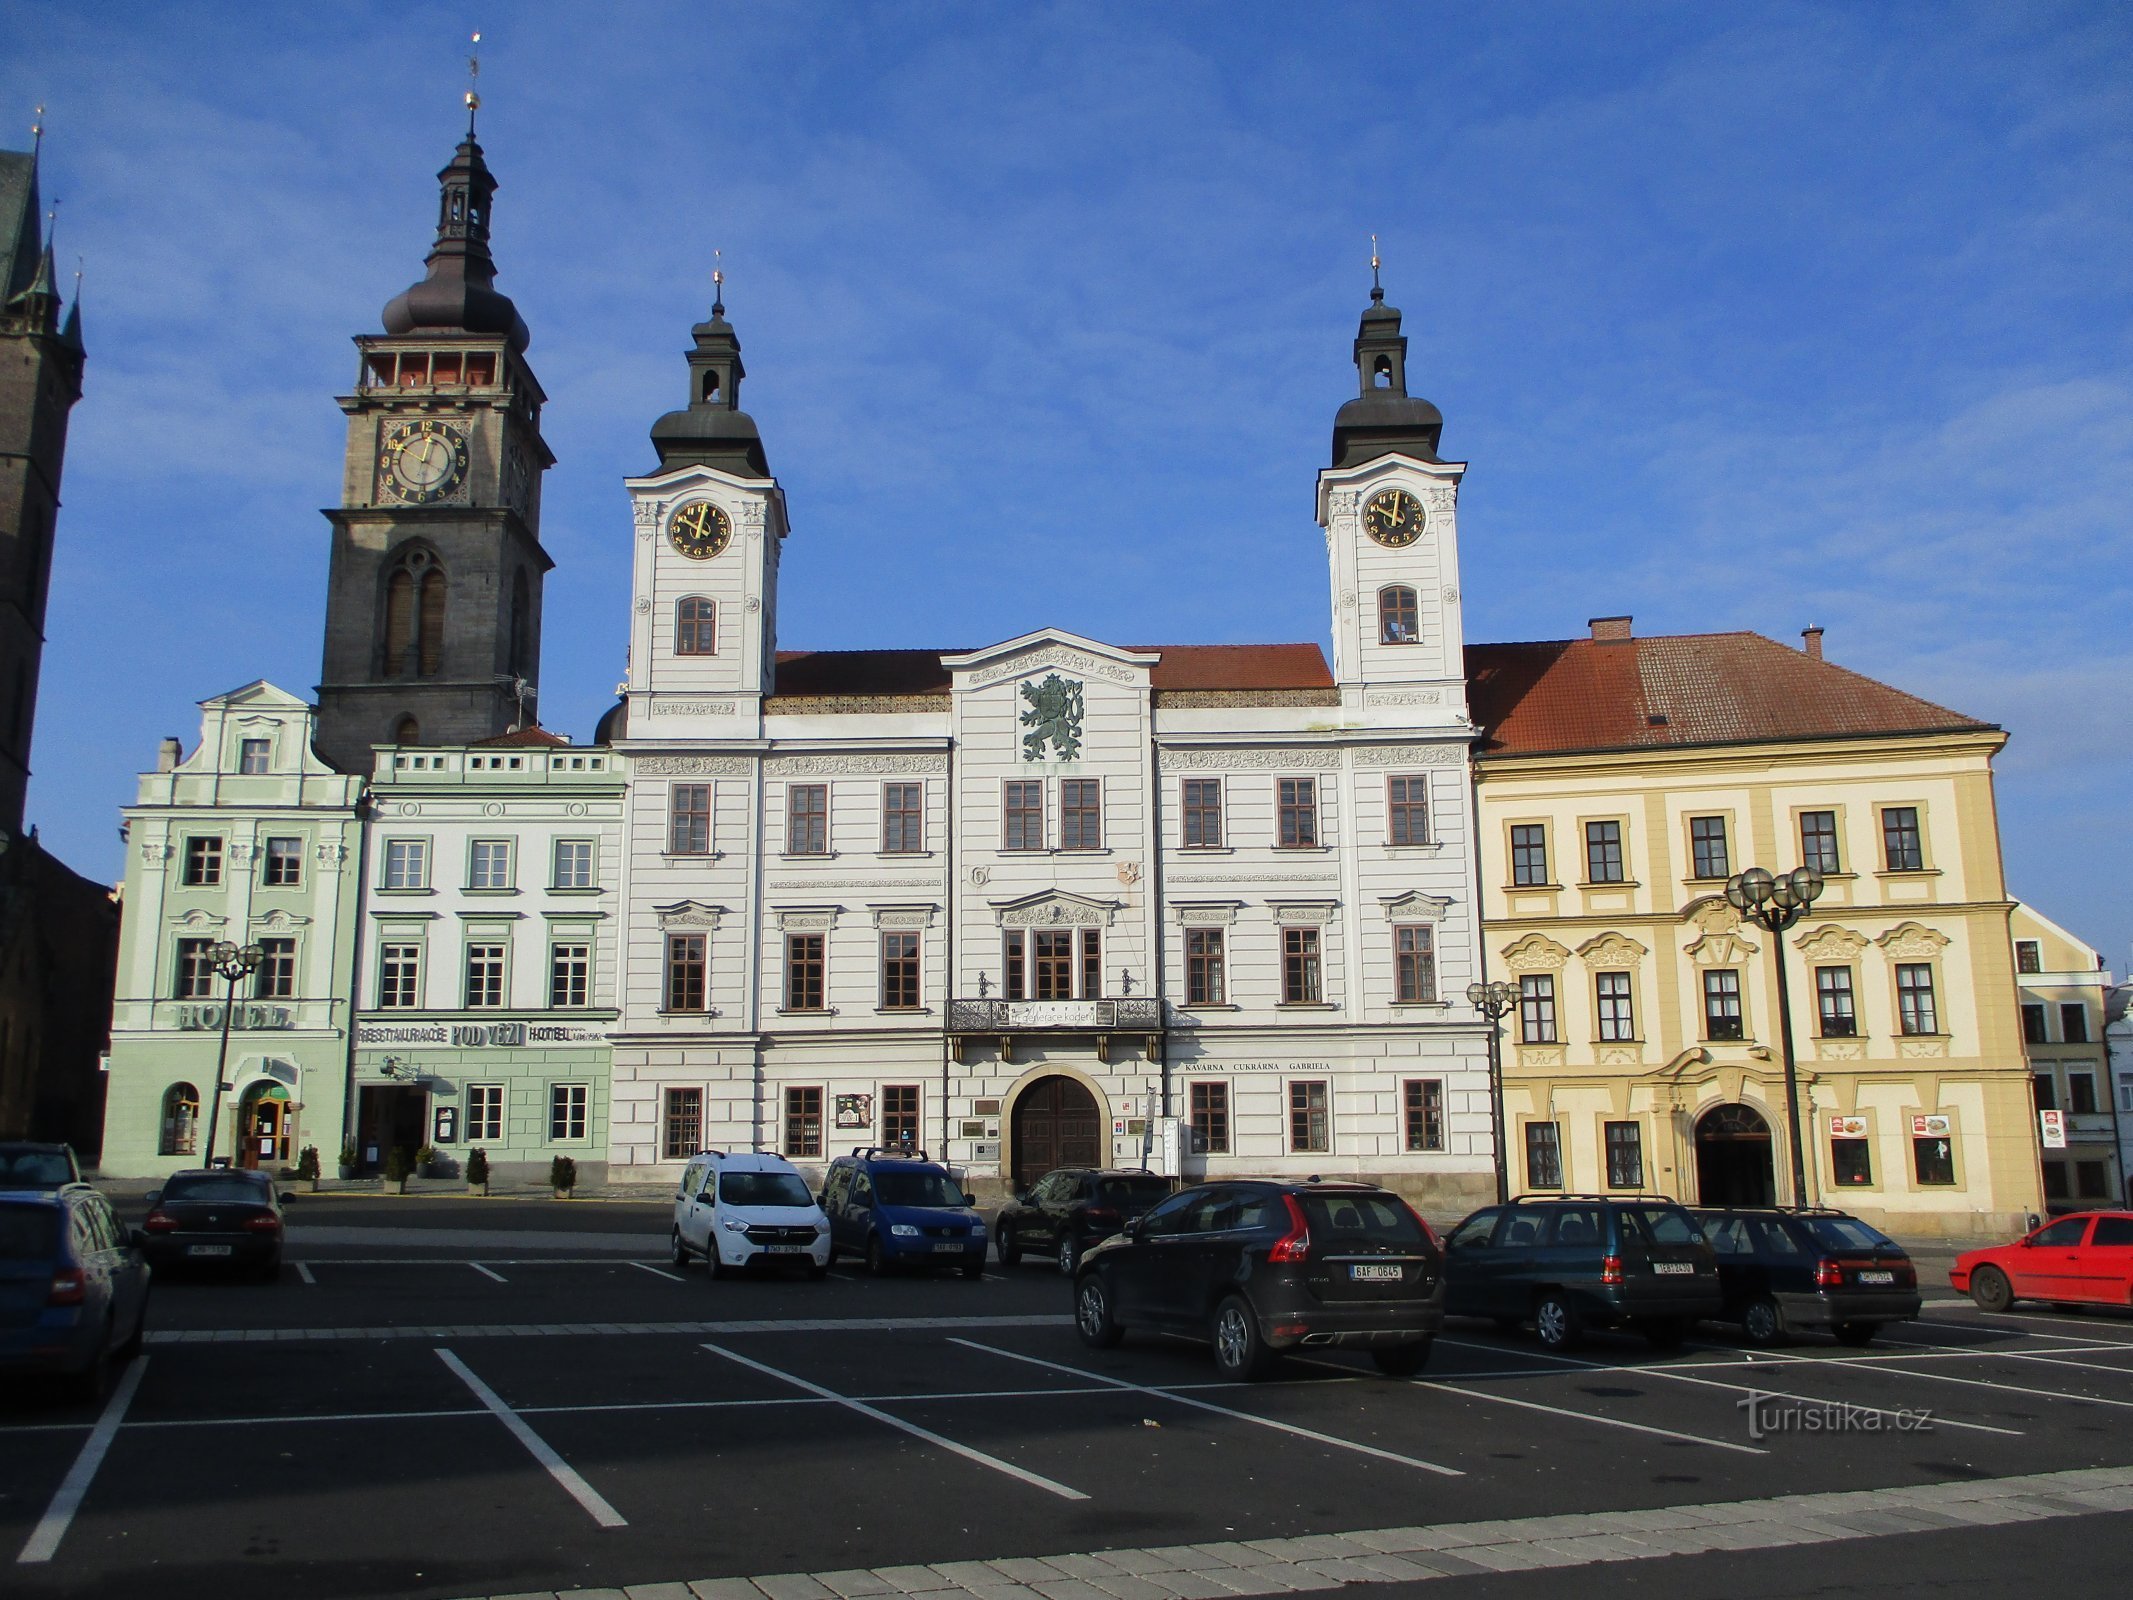 Dãy nhà phía tây ở Velké náměstí (Hradec Králové, ngày 9.2.2020 tháng XNUMX năm XNUMX)